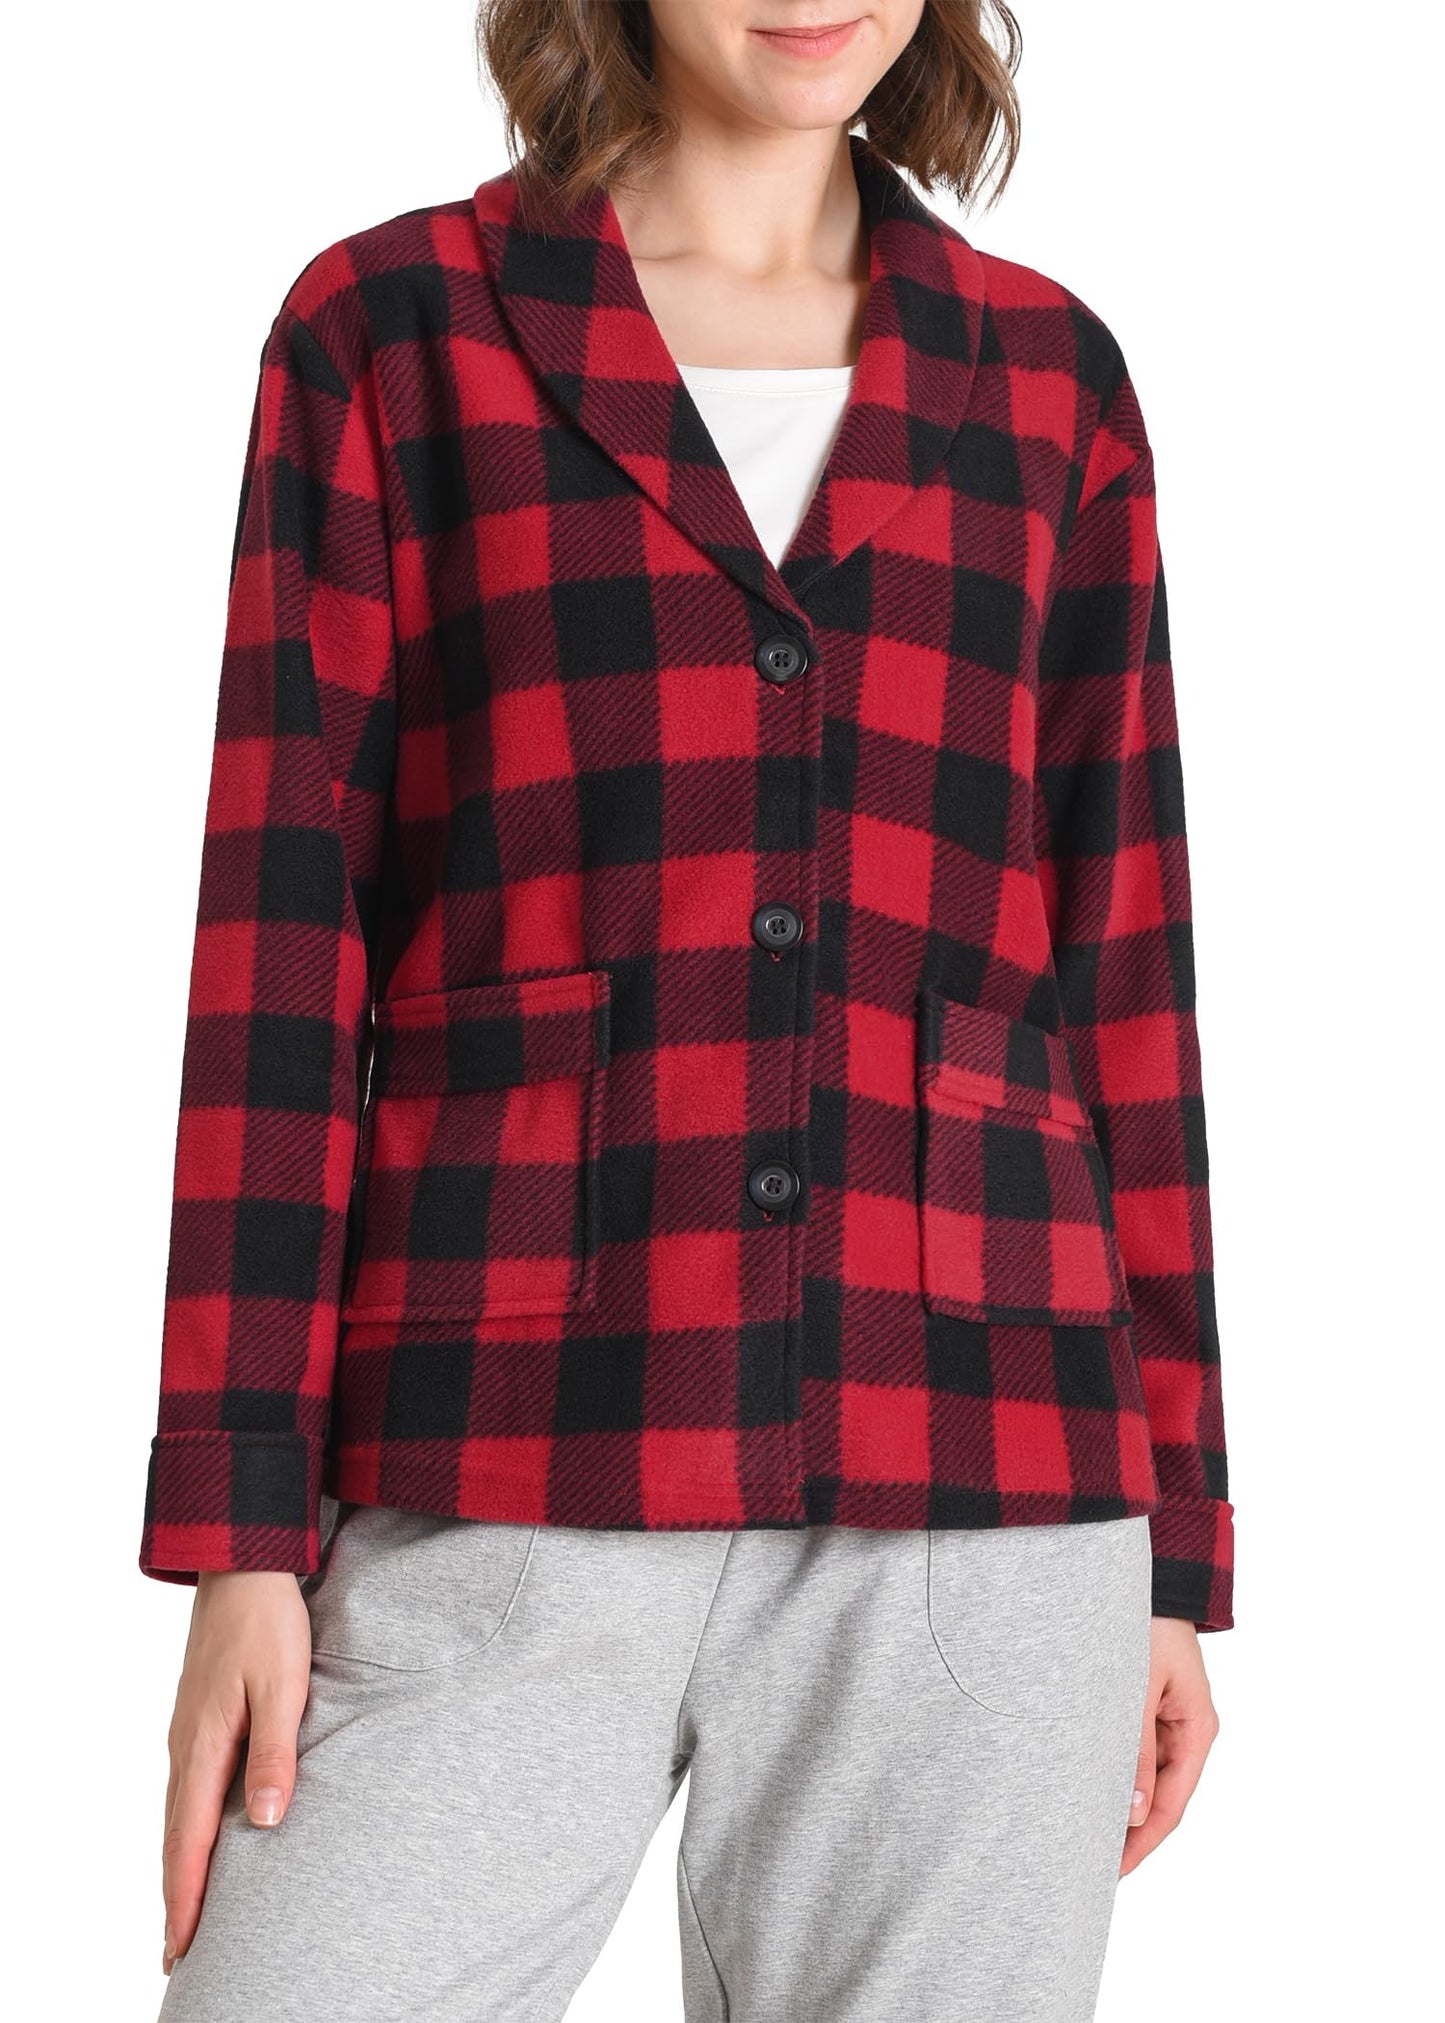 Women's Warm Fleece Bed Jacket with Pockets- Latuza